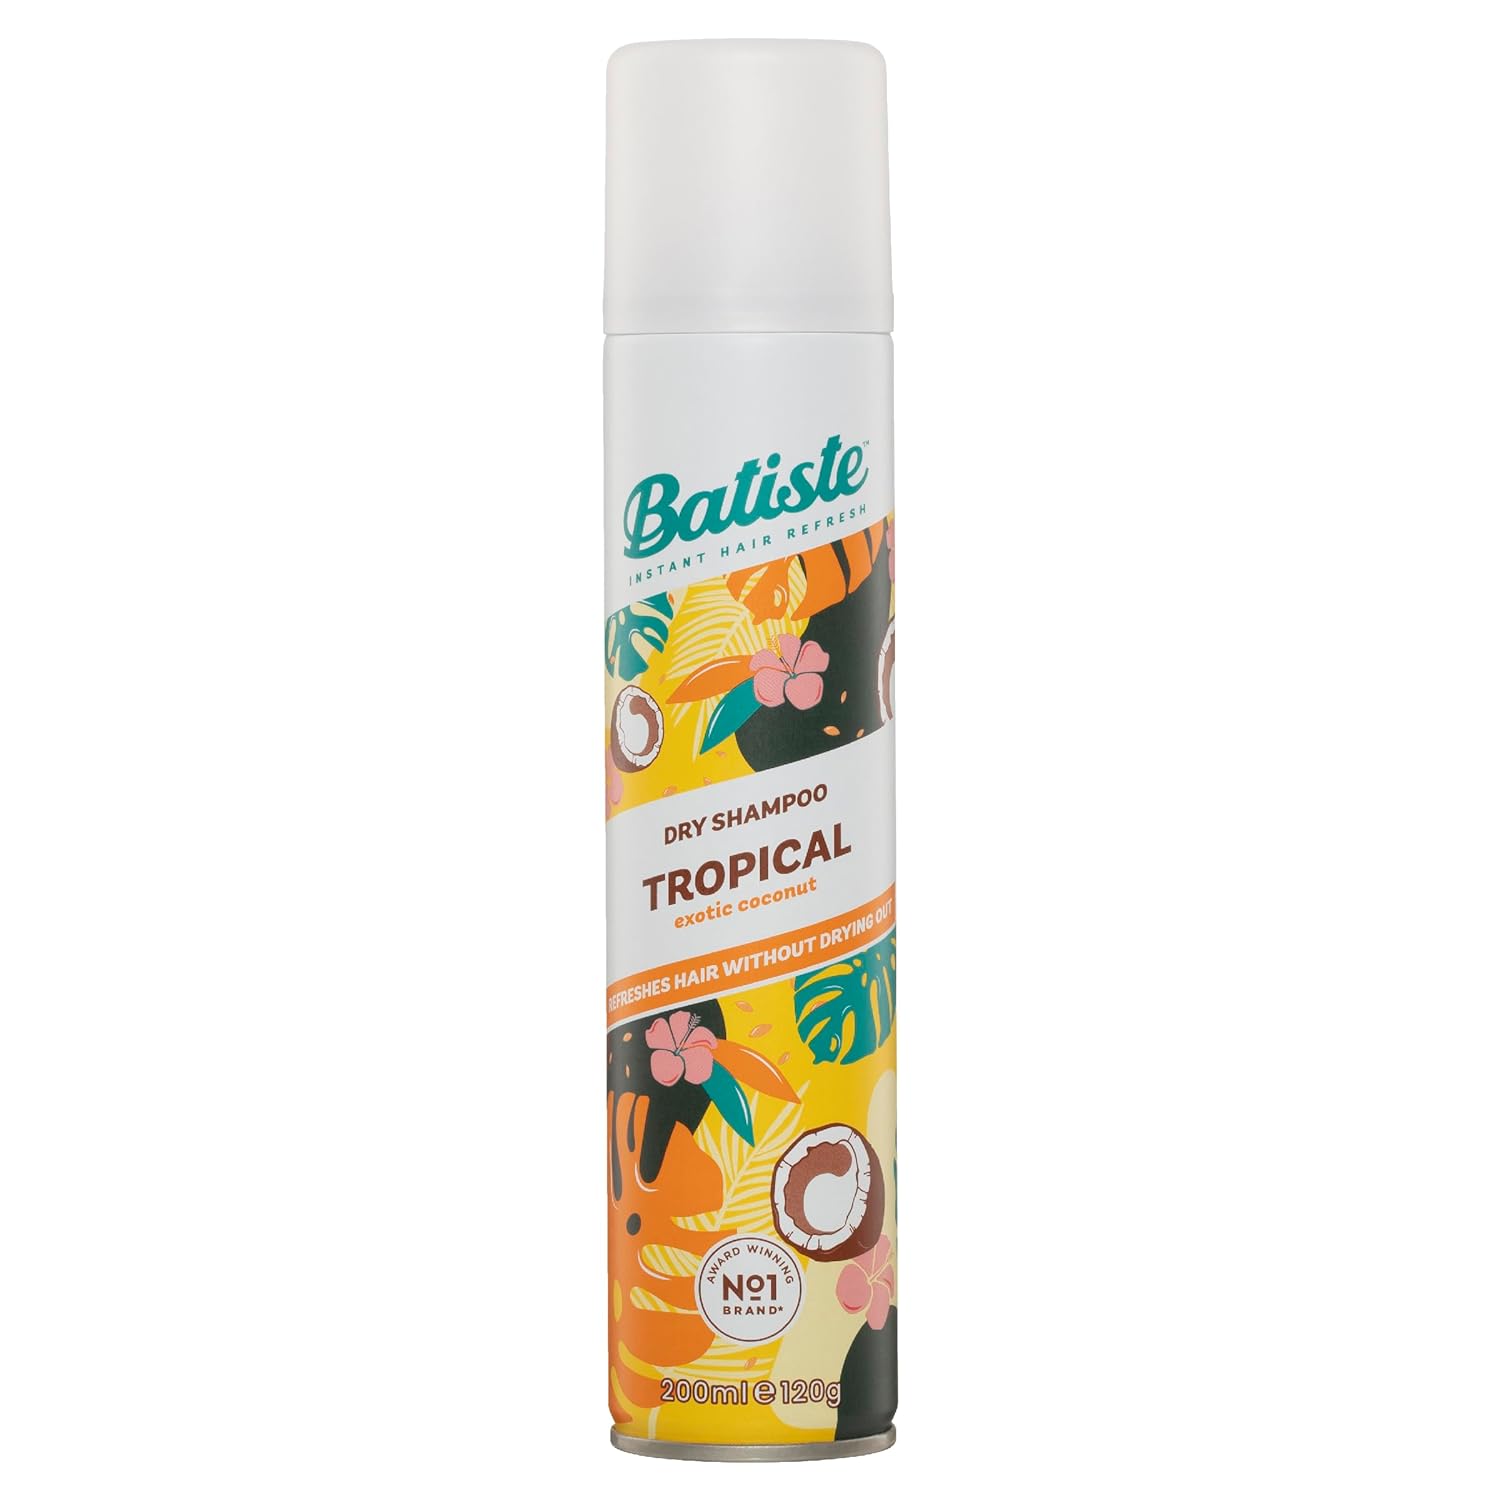 Batiste Dry Shampoo, Tropical, 6.73 oz